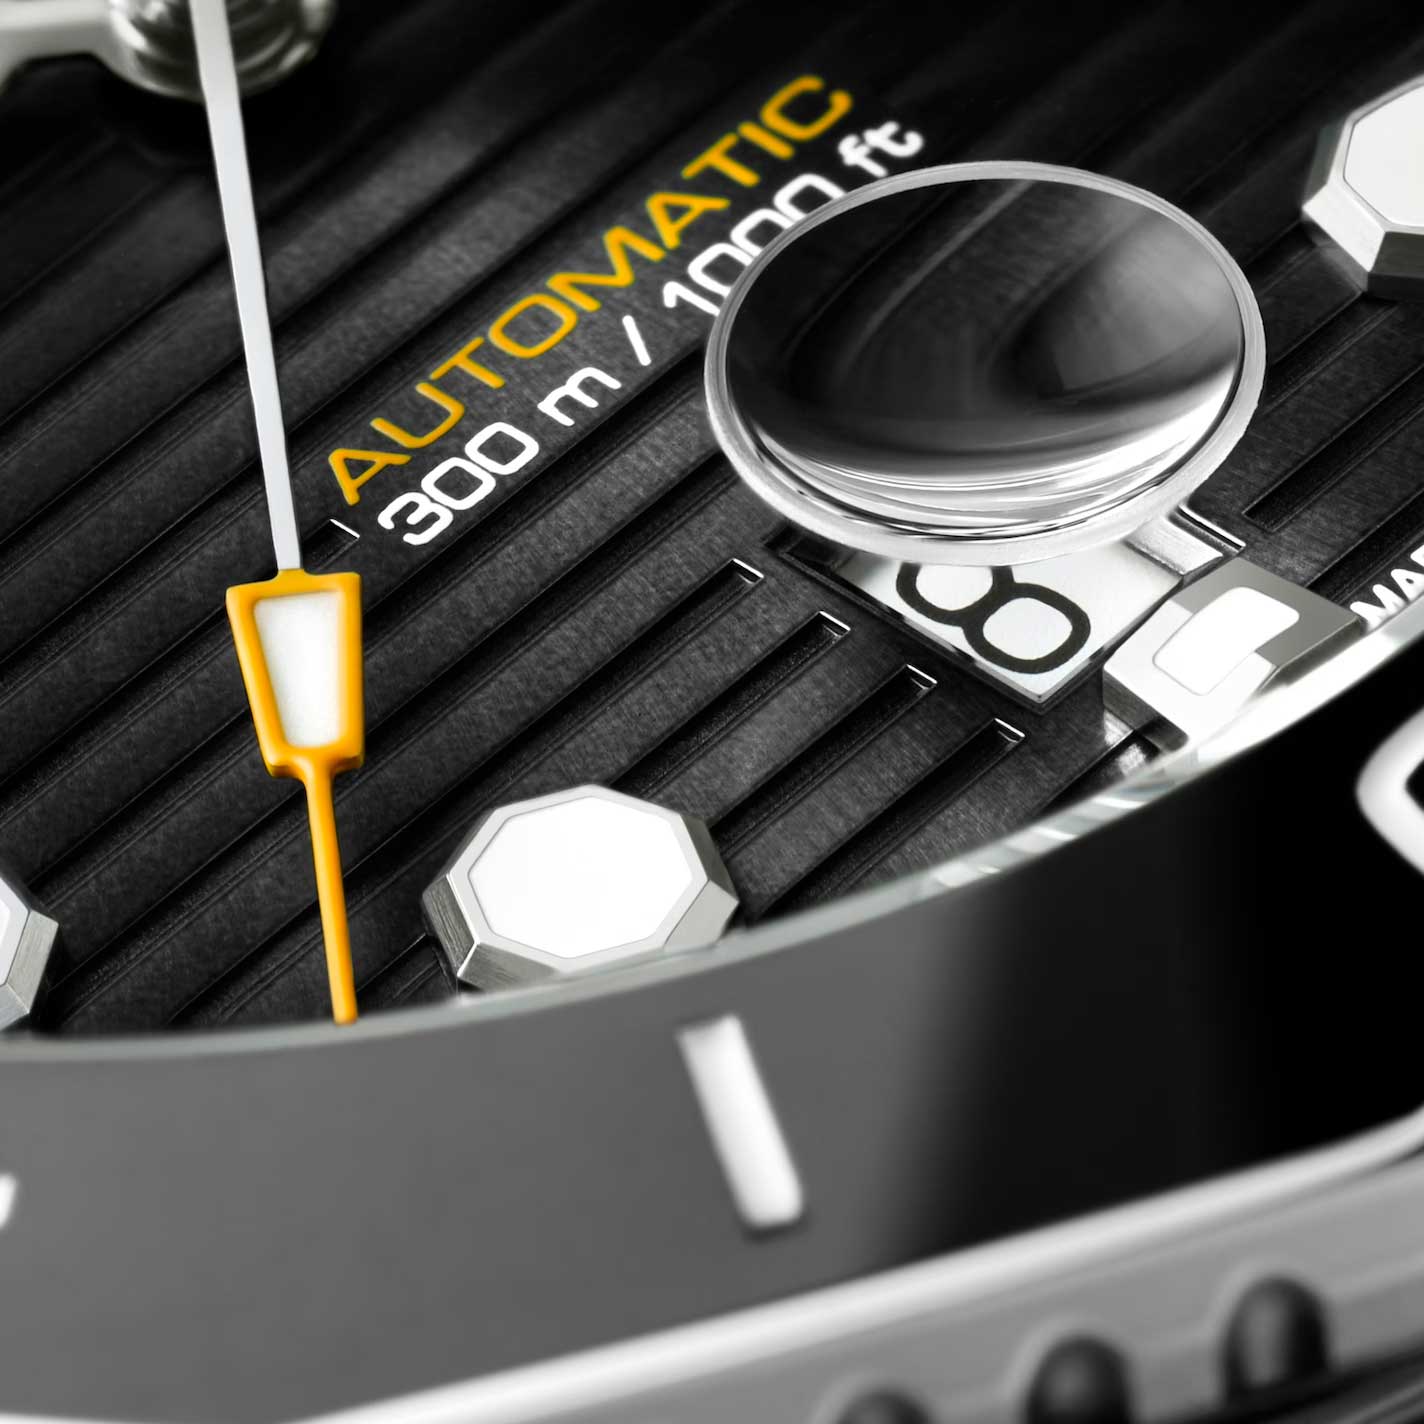 TAG Heuer Aquaracer Professional 300 Calibre 5 Automatic 43mm Watch